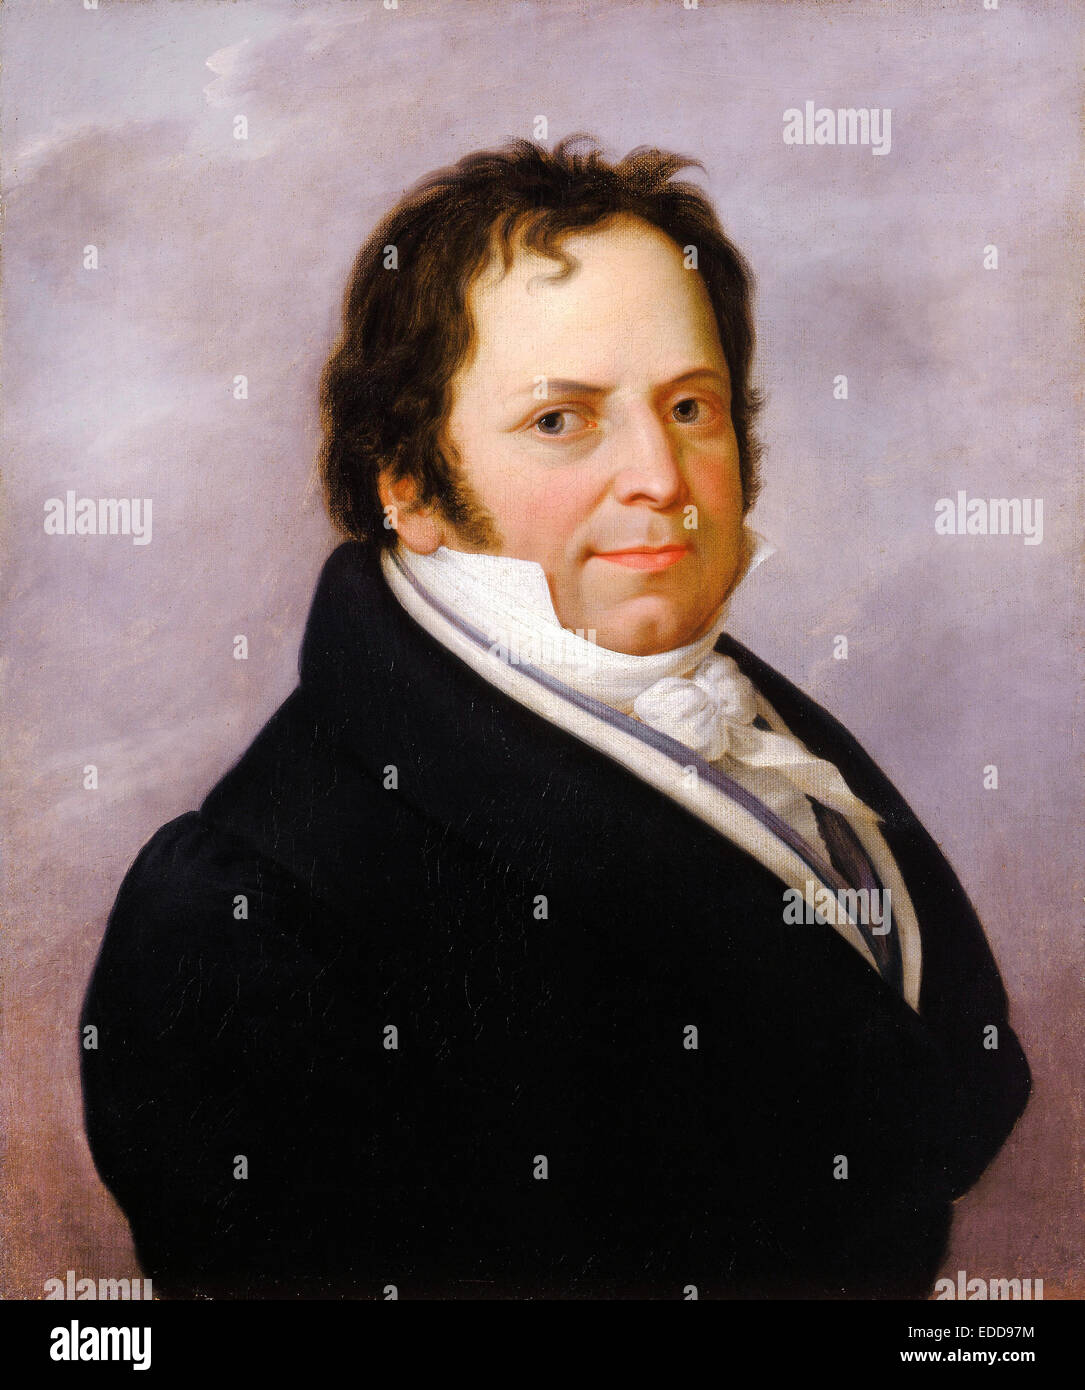 Gotthelf Leberecht Glaeser, Portrait of Herz Elias Reiss. Circa 1830. Oil on canvas. The Jewish Museum, New York, USA. Stock Photo